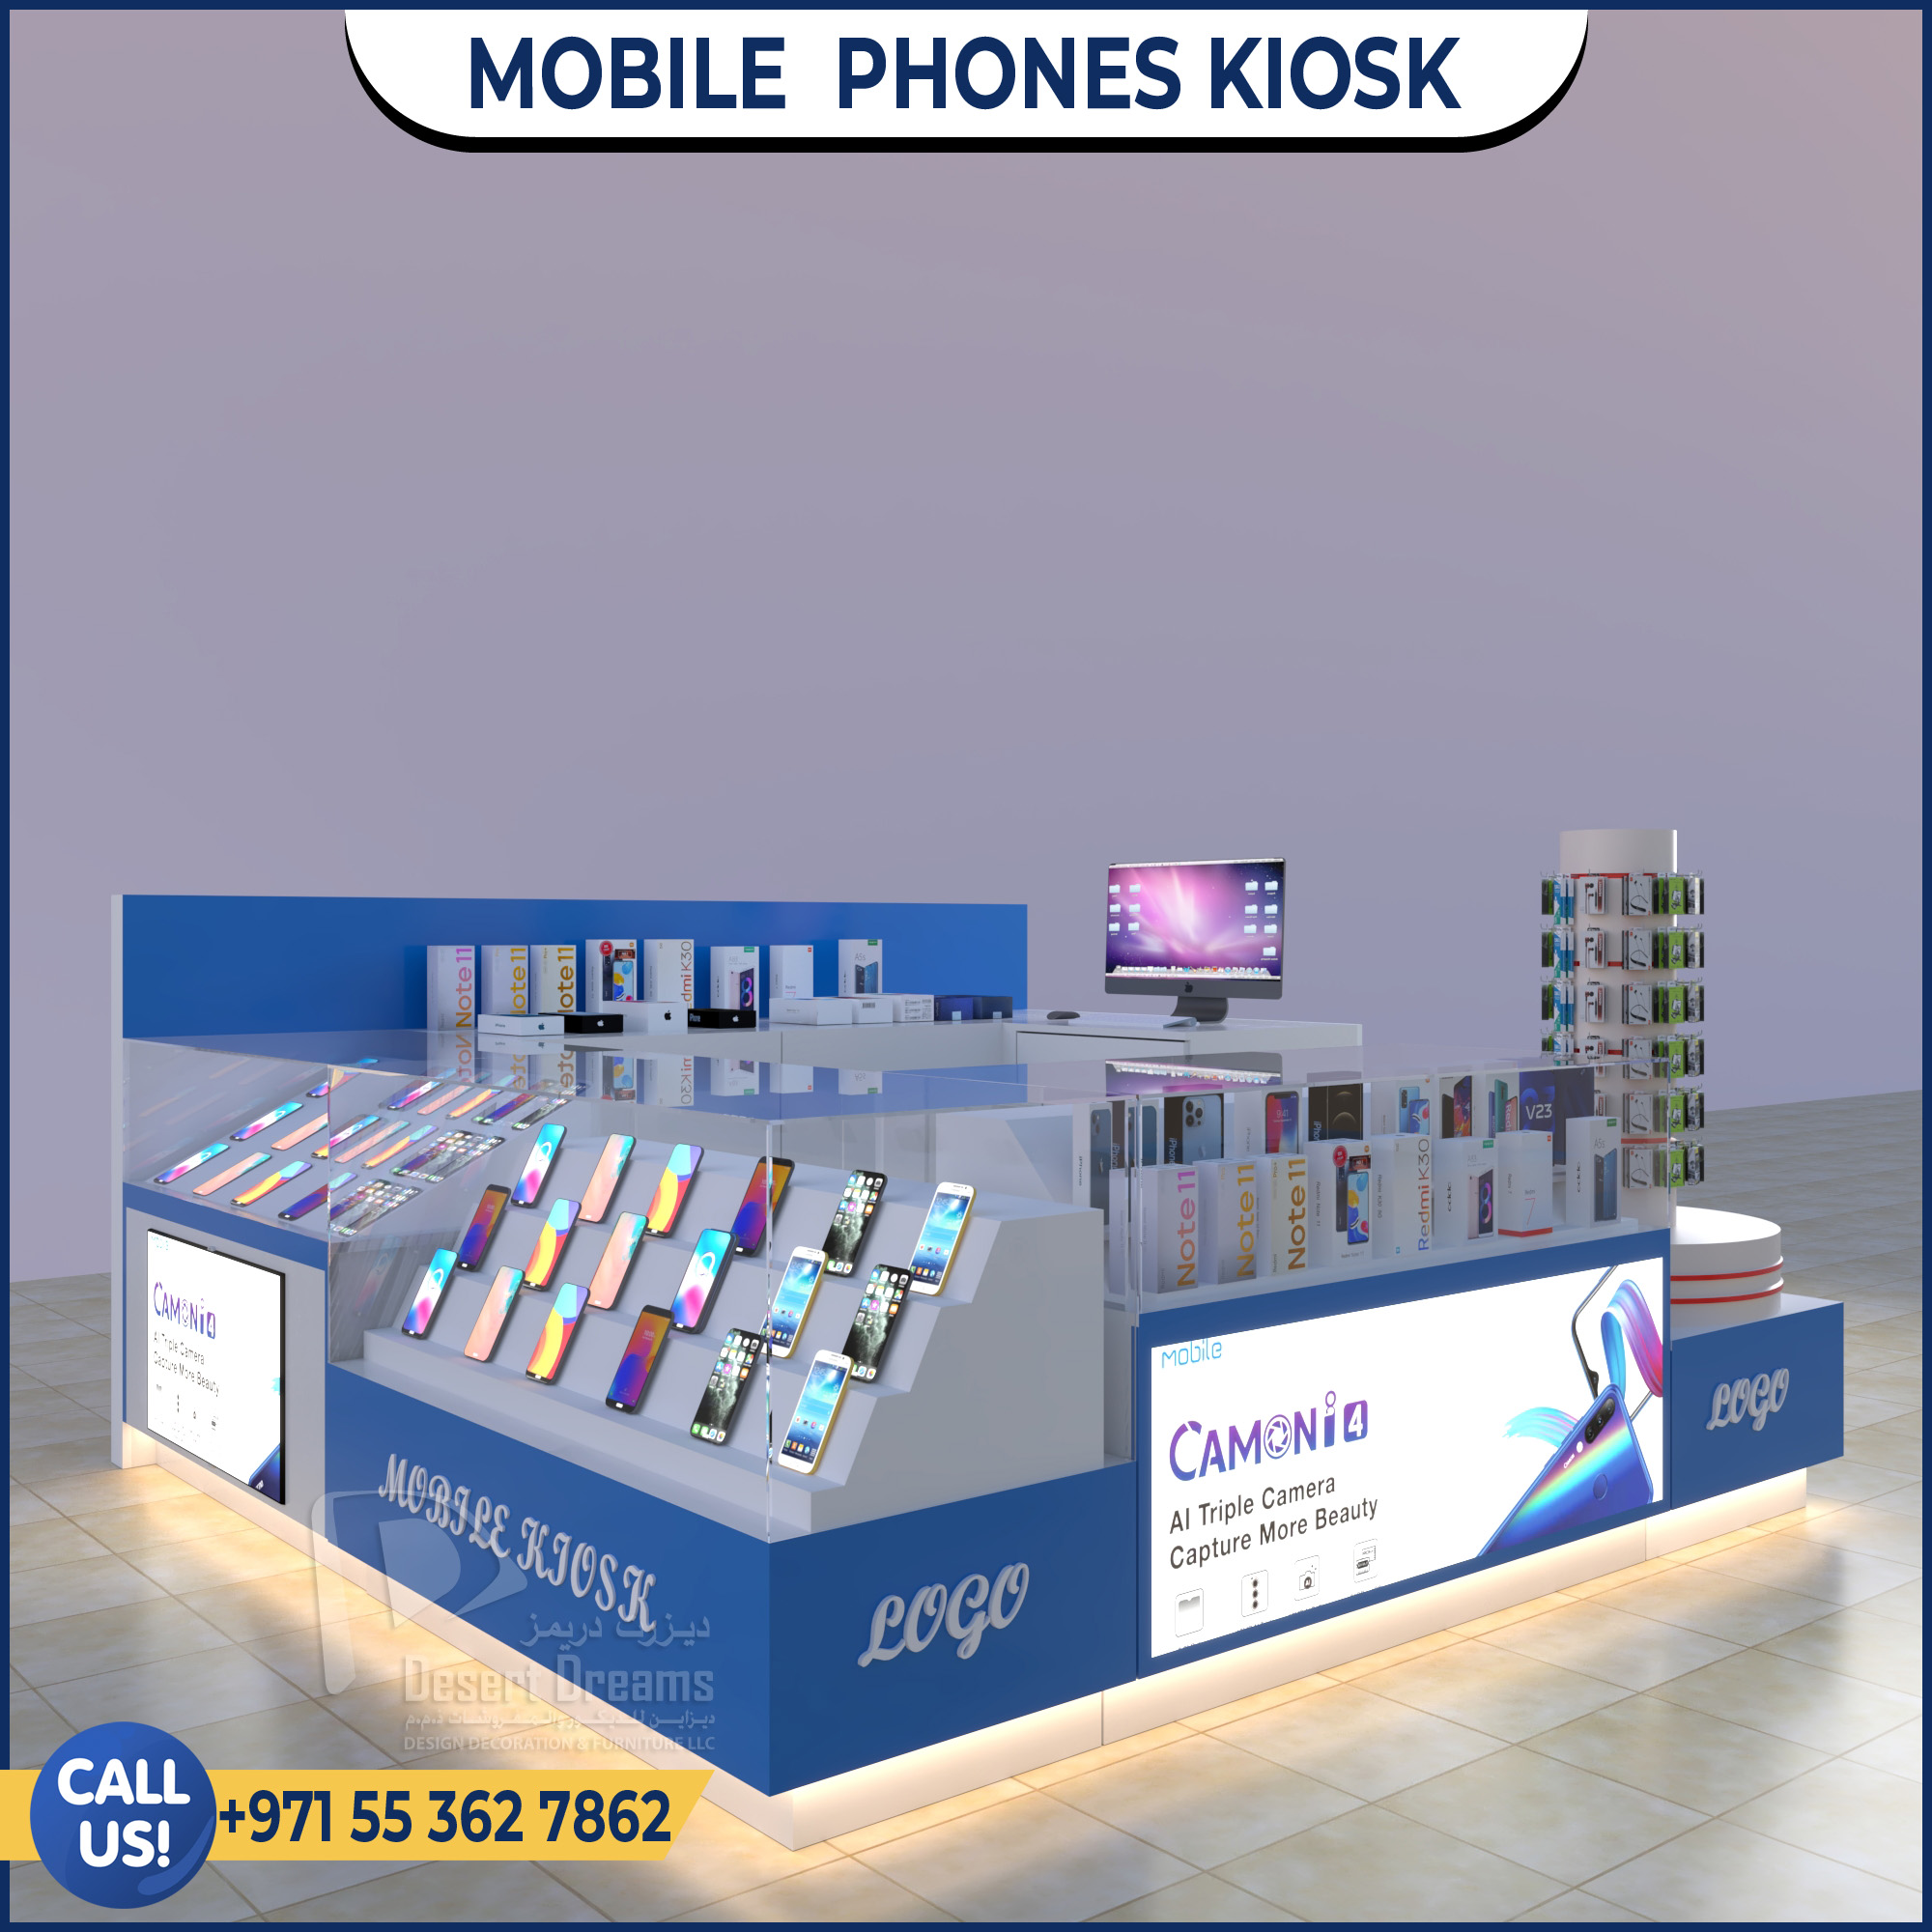 Mobile Phone Kiosk Design in UAE.jpg